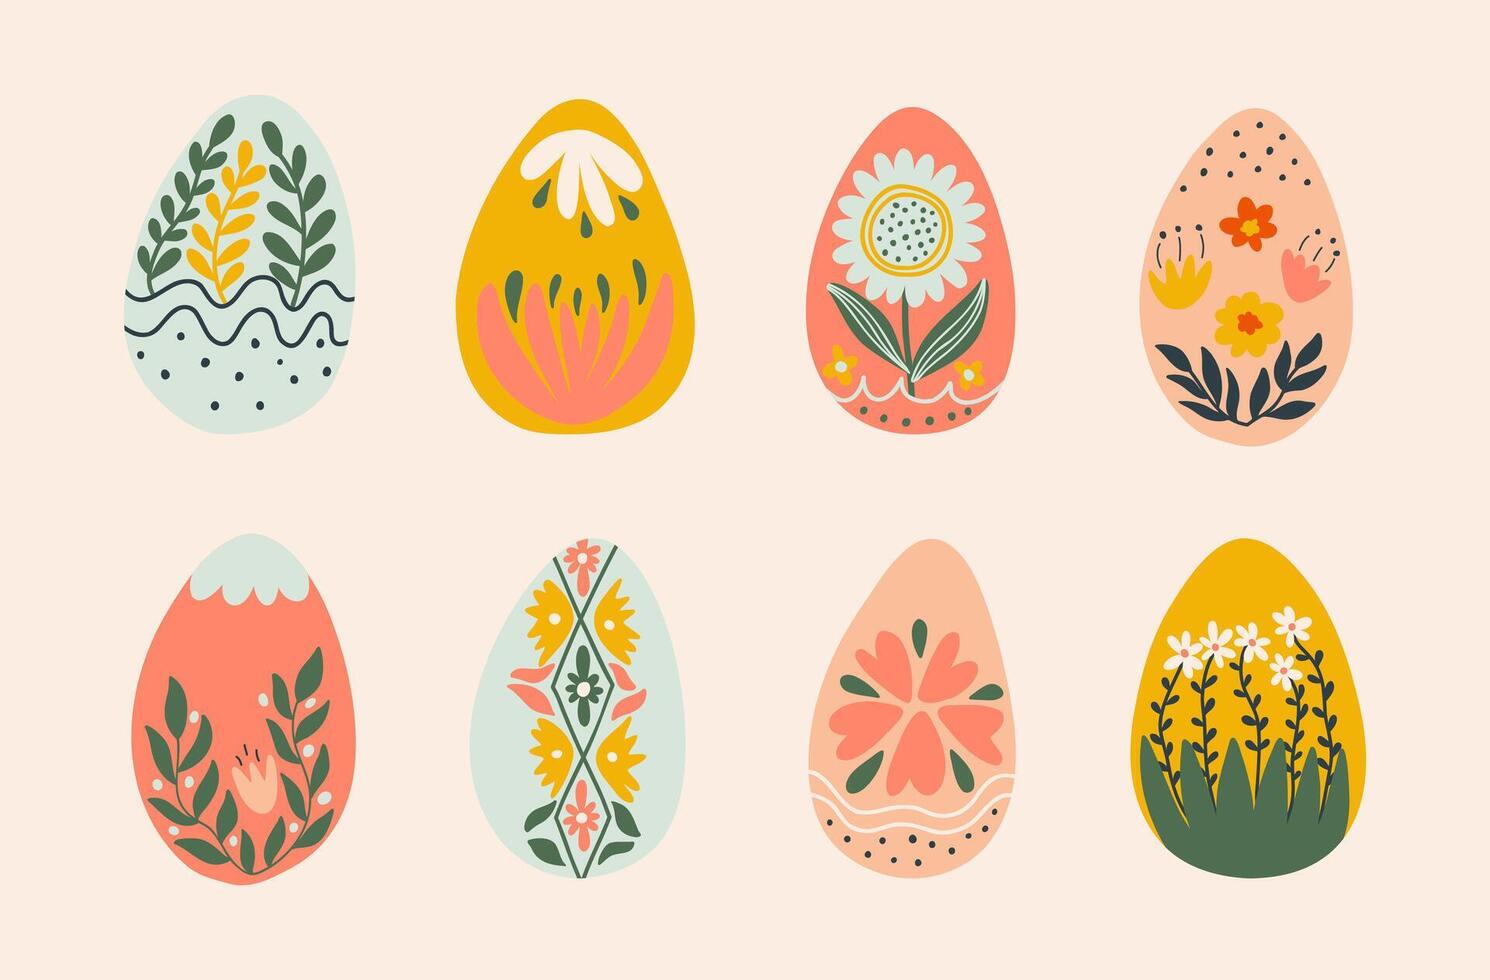 Pascua de Resurrección huevos con flores colocar. dibujos animados ilustración para un huevo caza. vector